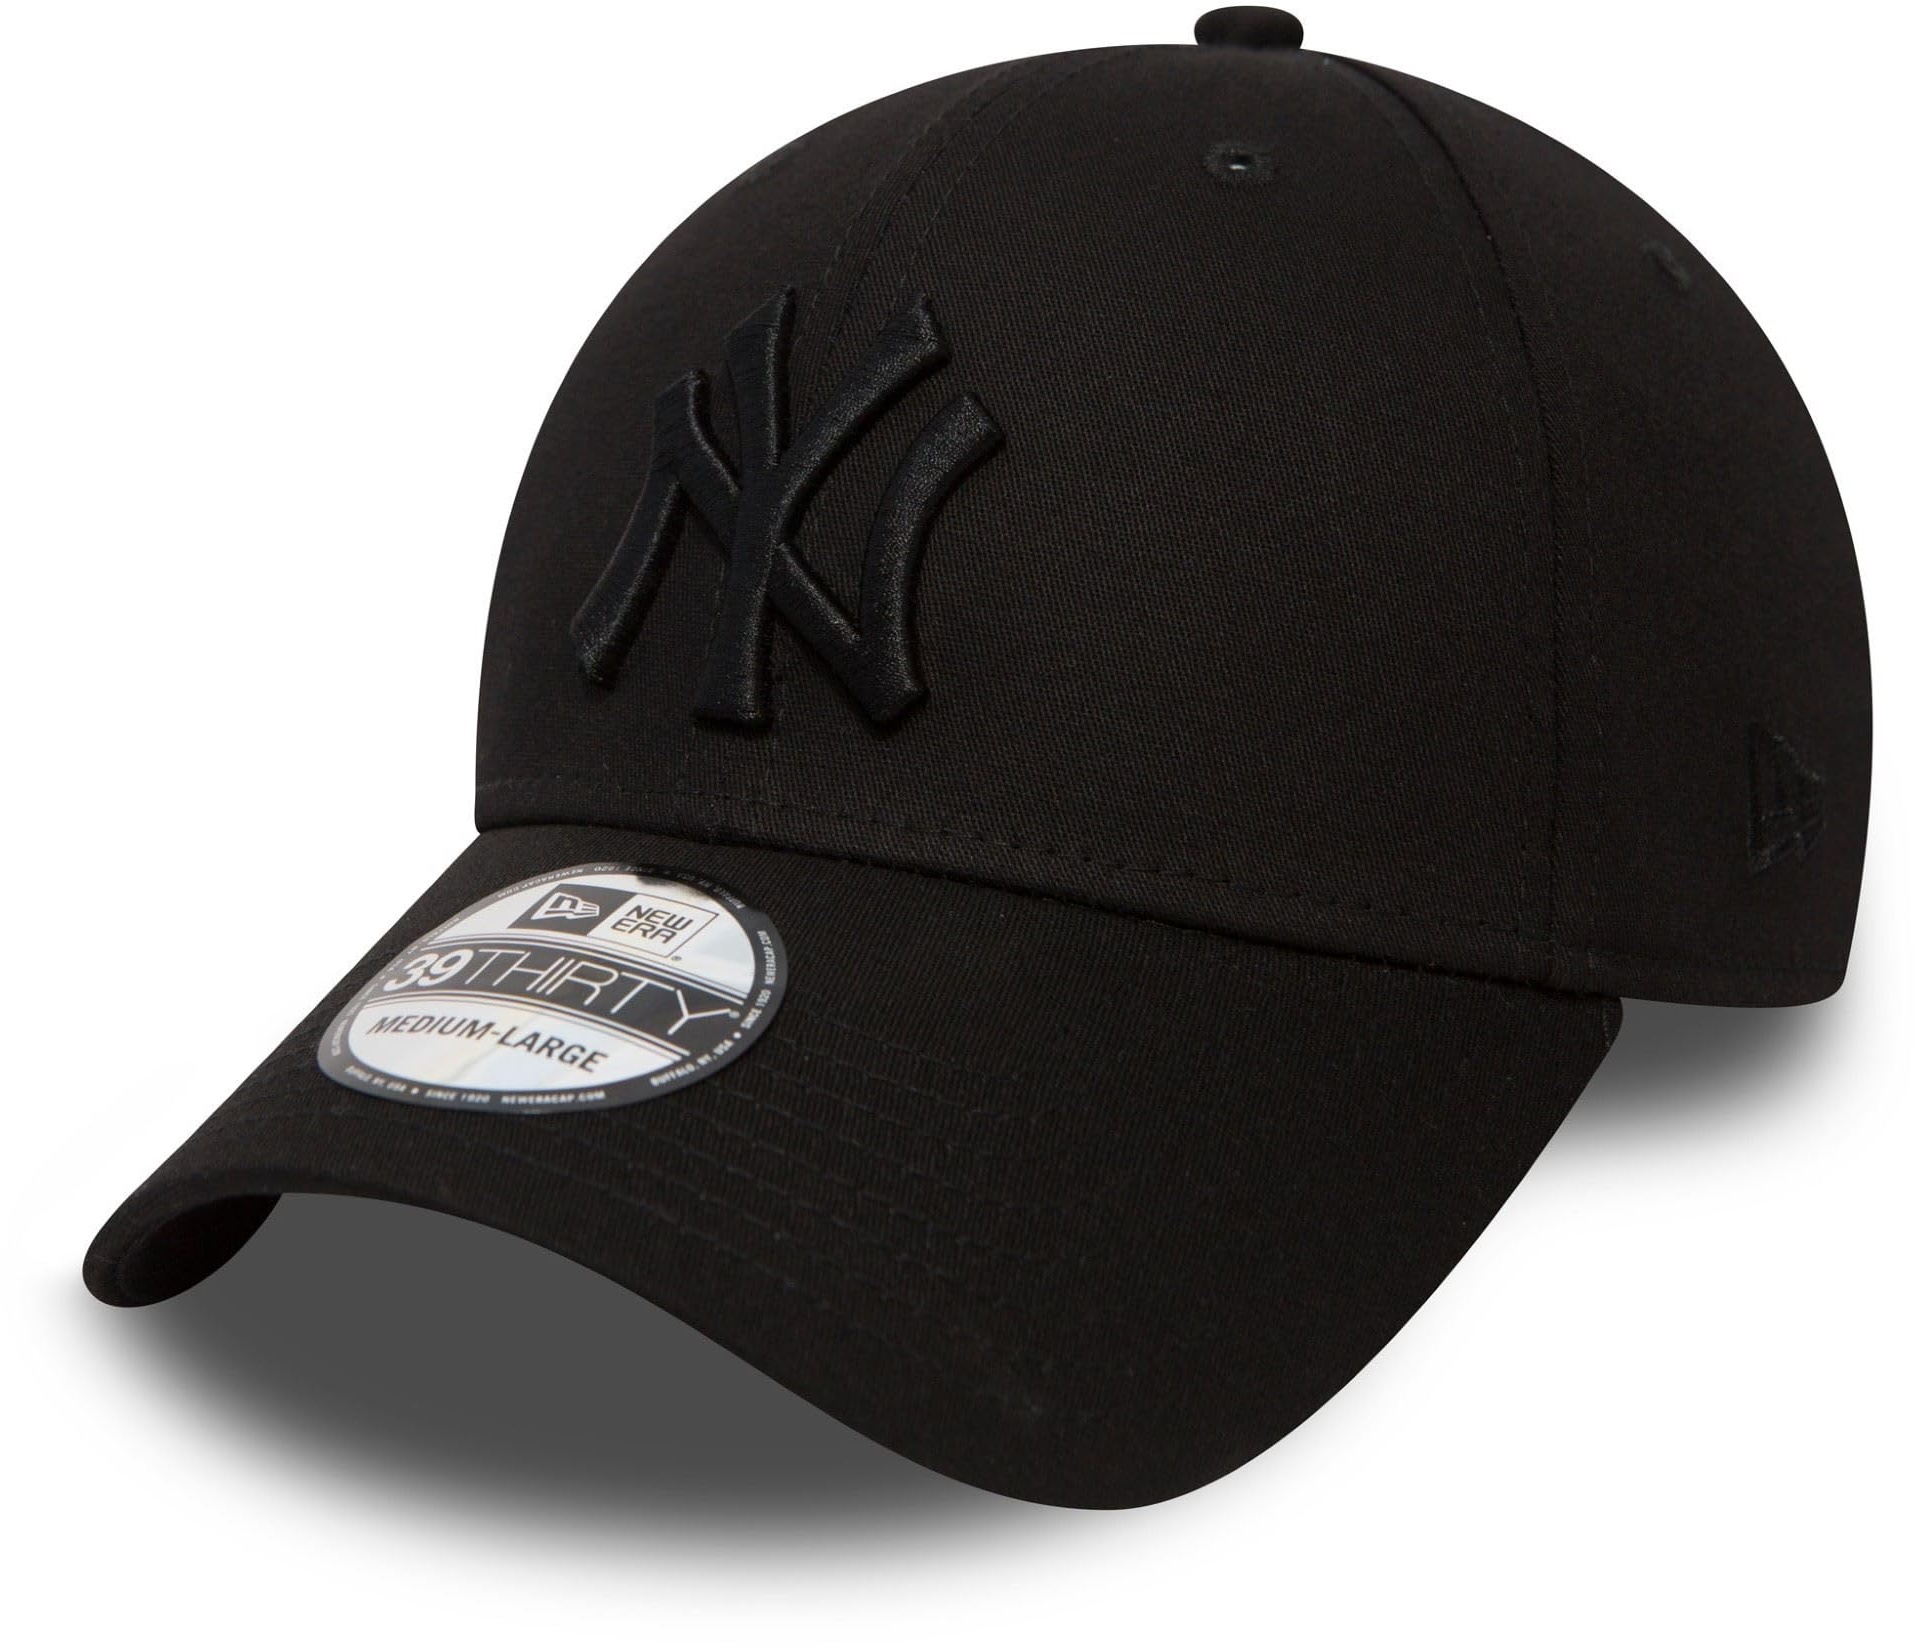 New Era New York Yankees Black MLB Classic 39Thirty Stretch Cap - S-M (6 3/8-7 1/4)